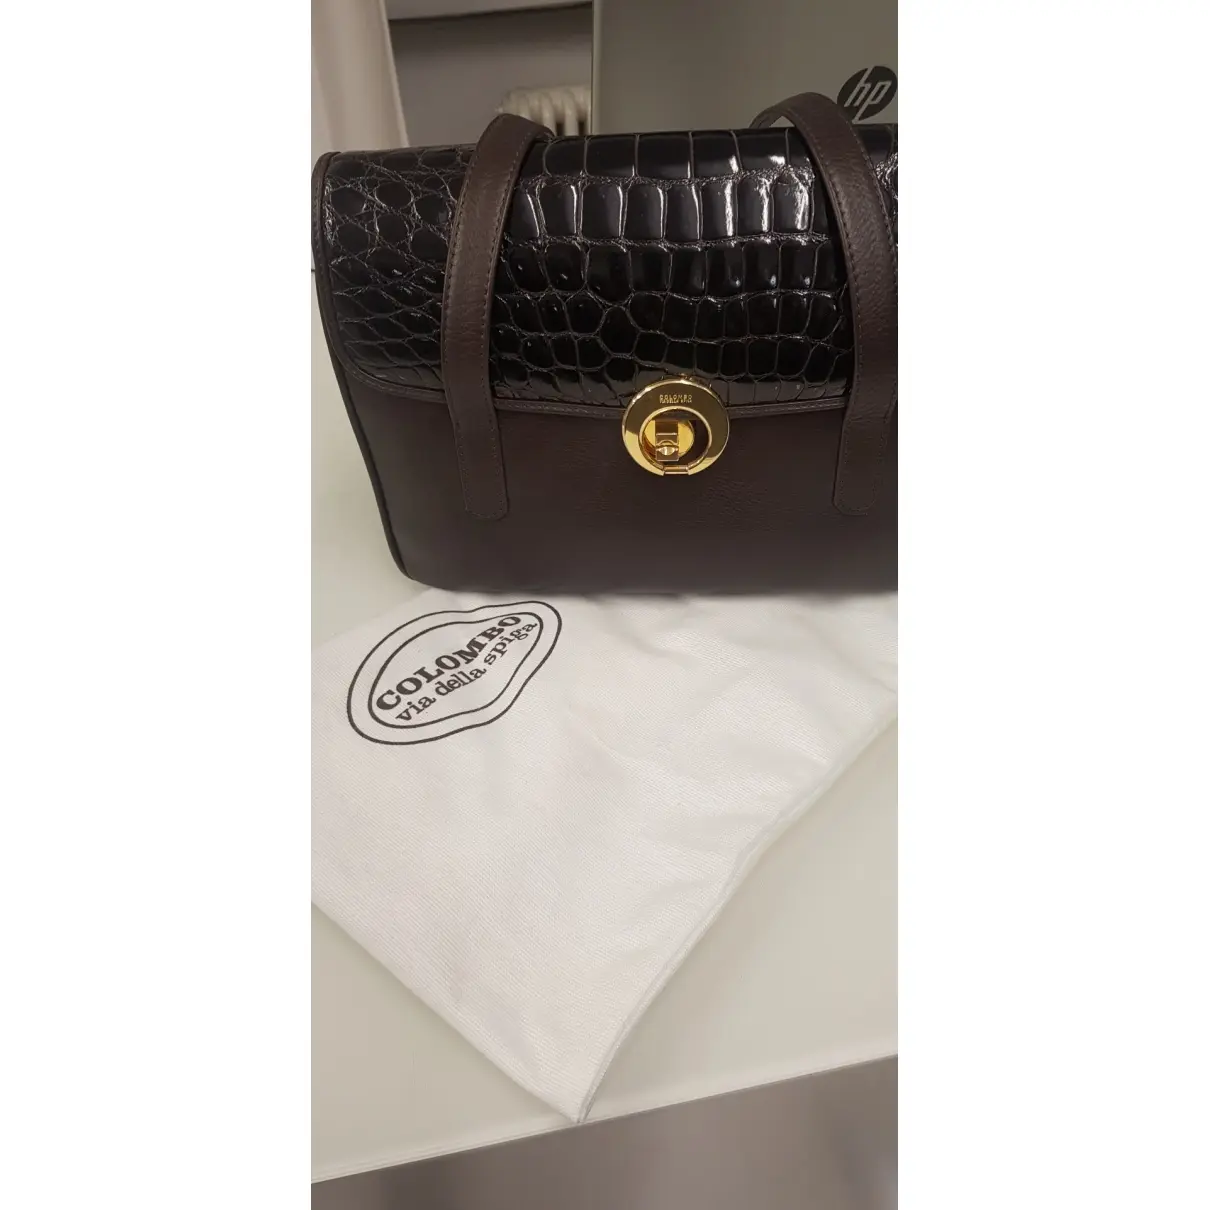 Leather handbag Colombo